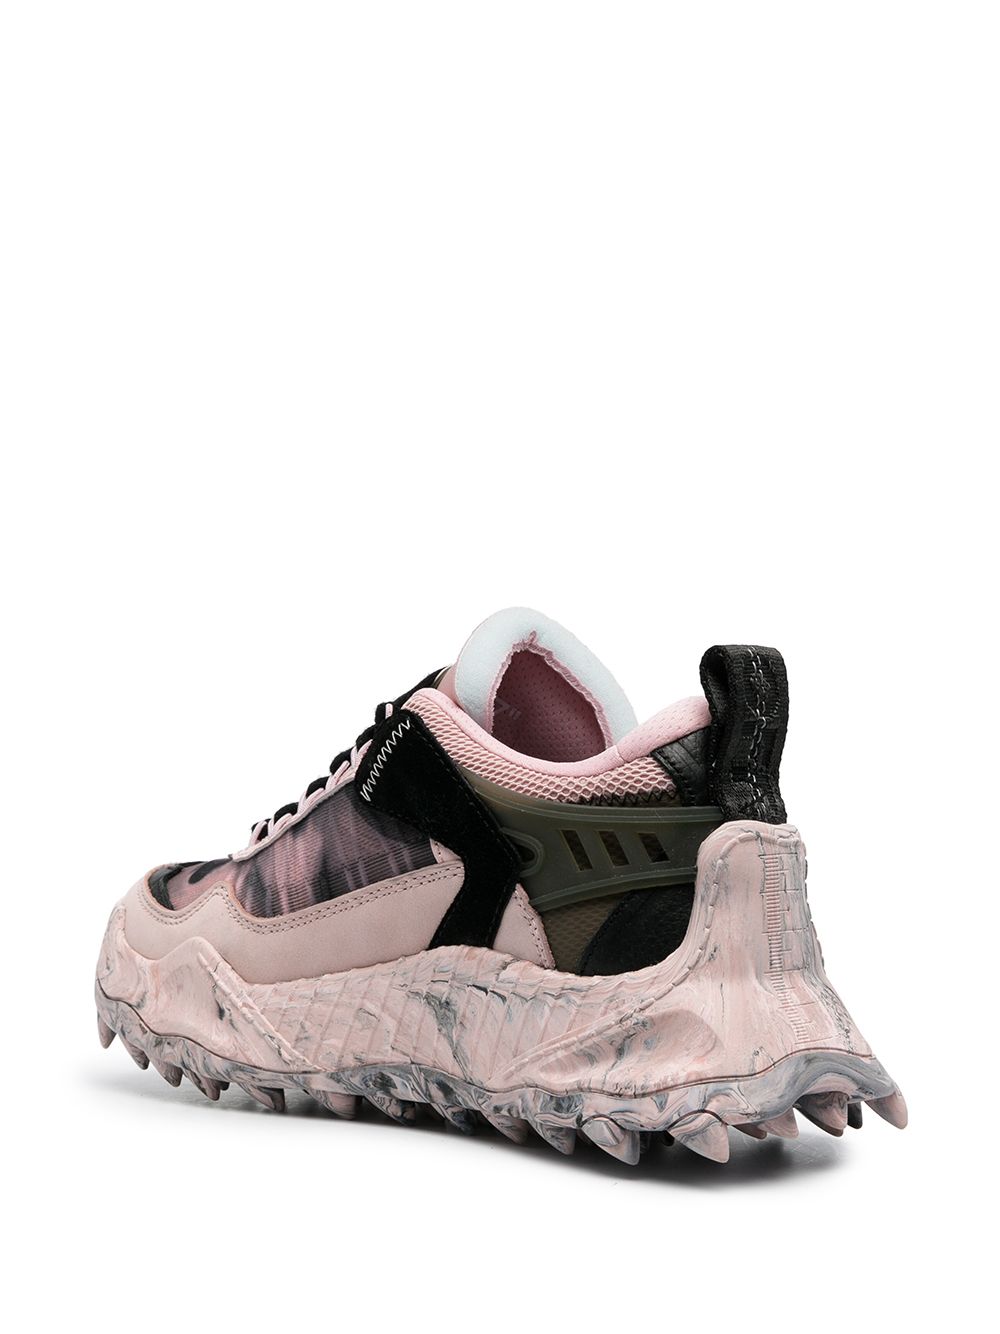 OFF-WHITE WOMEN Odsy-1000 Sneakers Pink/Black - MAISONDEFASHION.COM